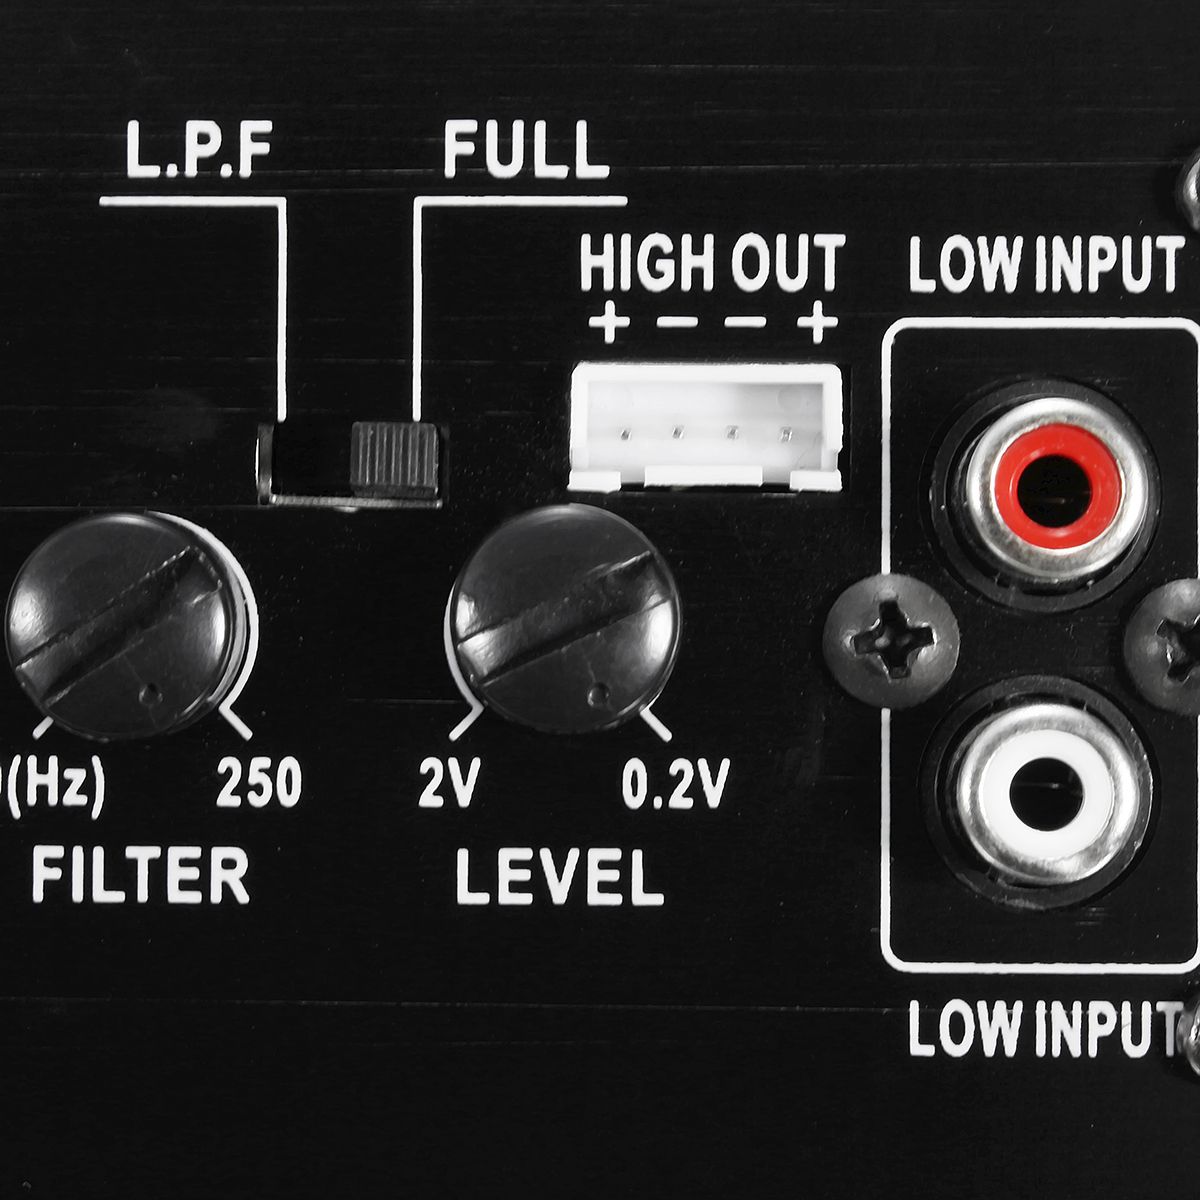 150W-Car-Subwoofe-Hi-Fi-Bass-Power-Stereo-Amplifier-Board-6-12inch-Digital-AMP-1351103